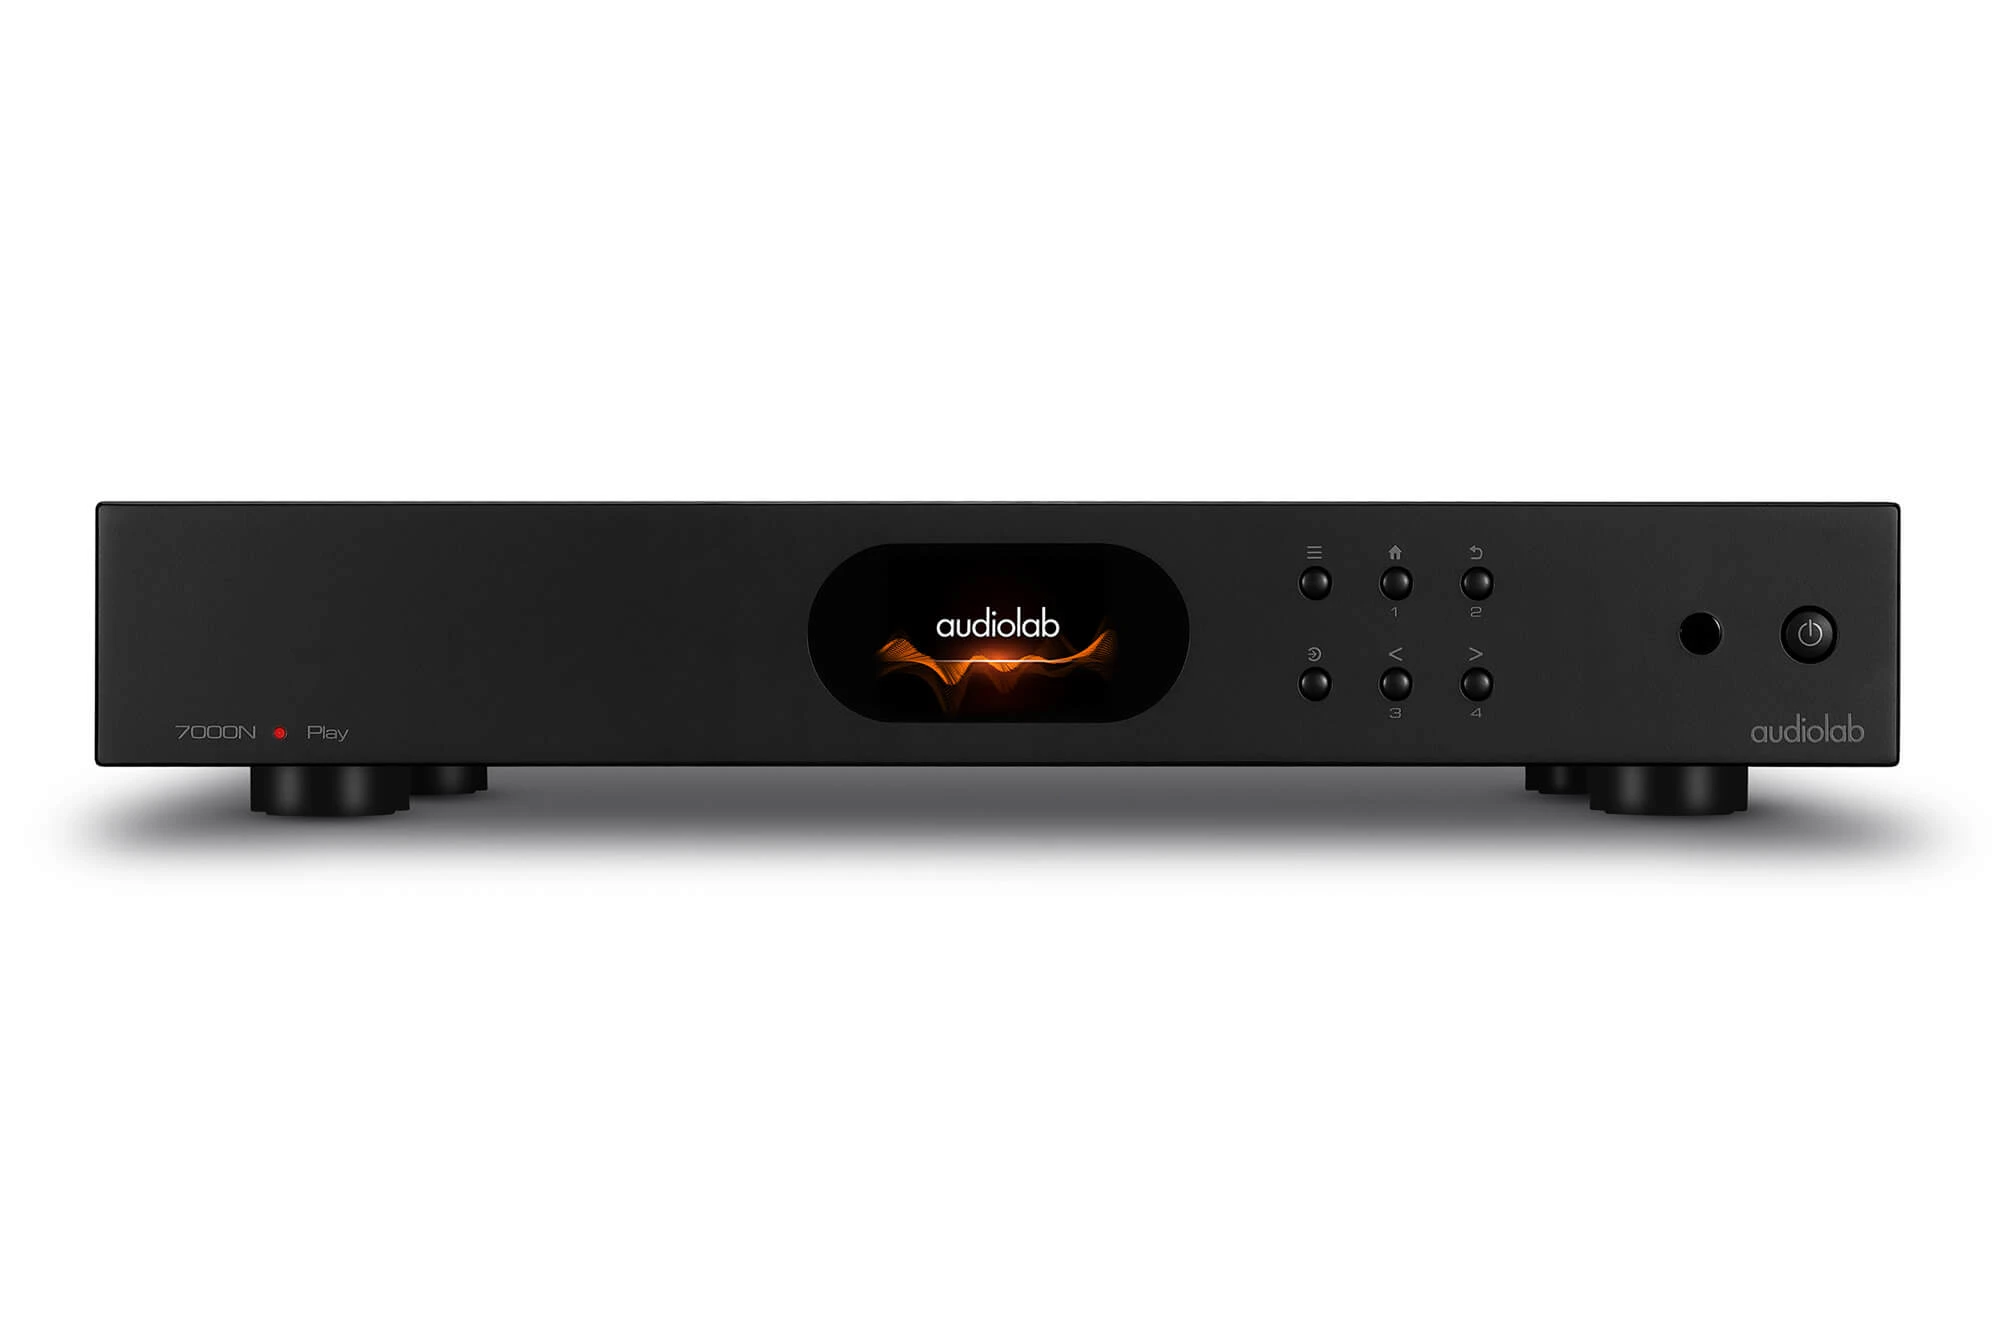 Audiolab 7000N Play, Netzwerk-Player